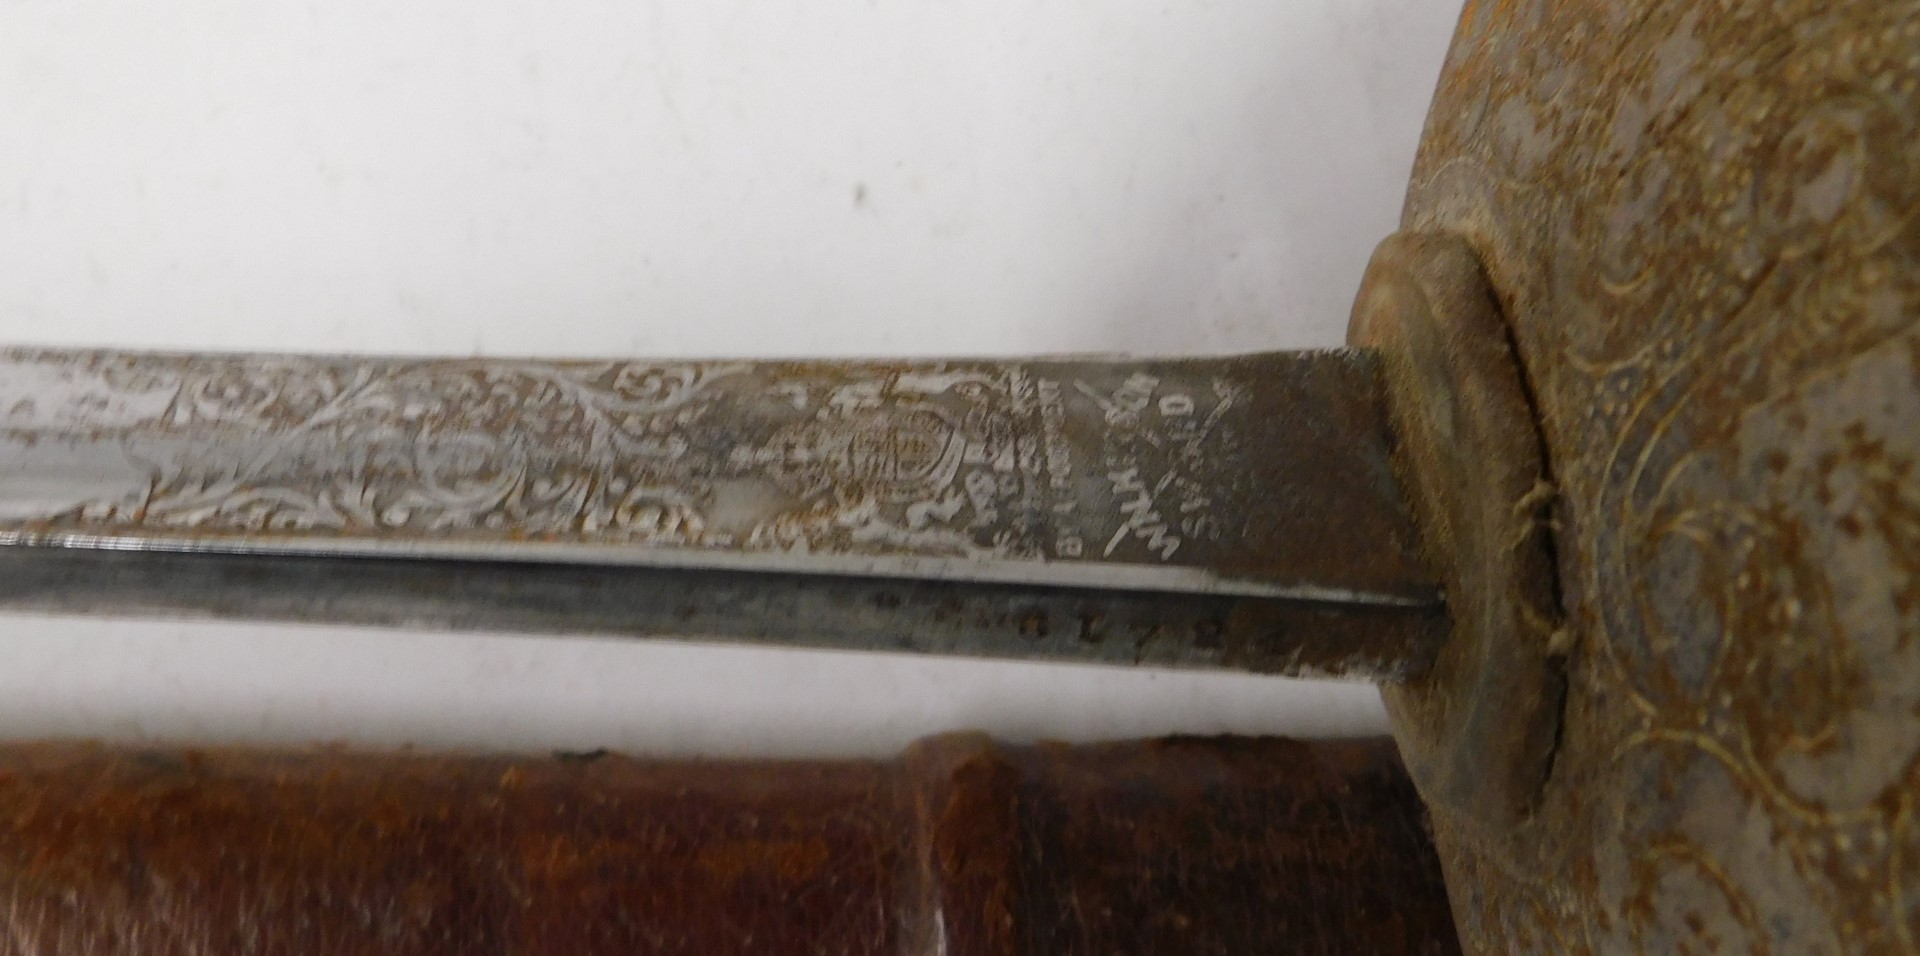 A George V dress sword, engraved Wilkinson blade, numbered 61794, engraved guard and bound shark ski - Image 5 of 5